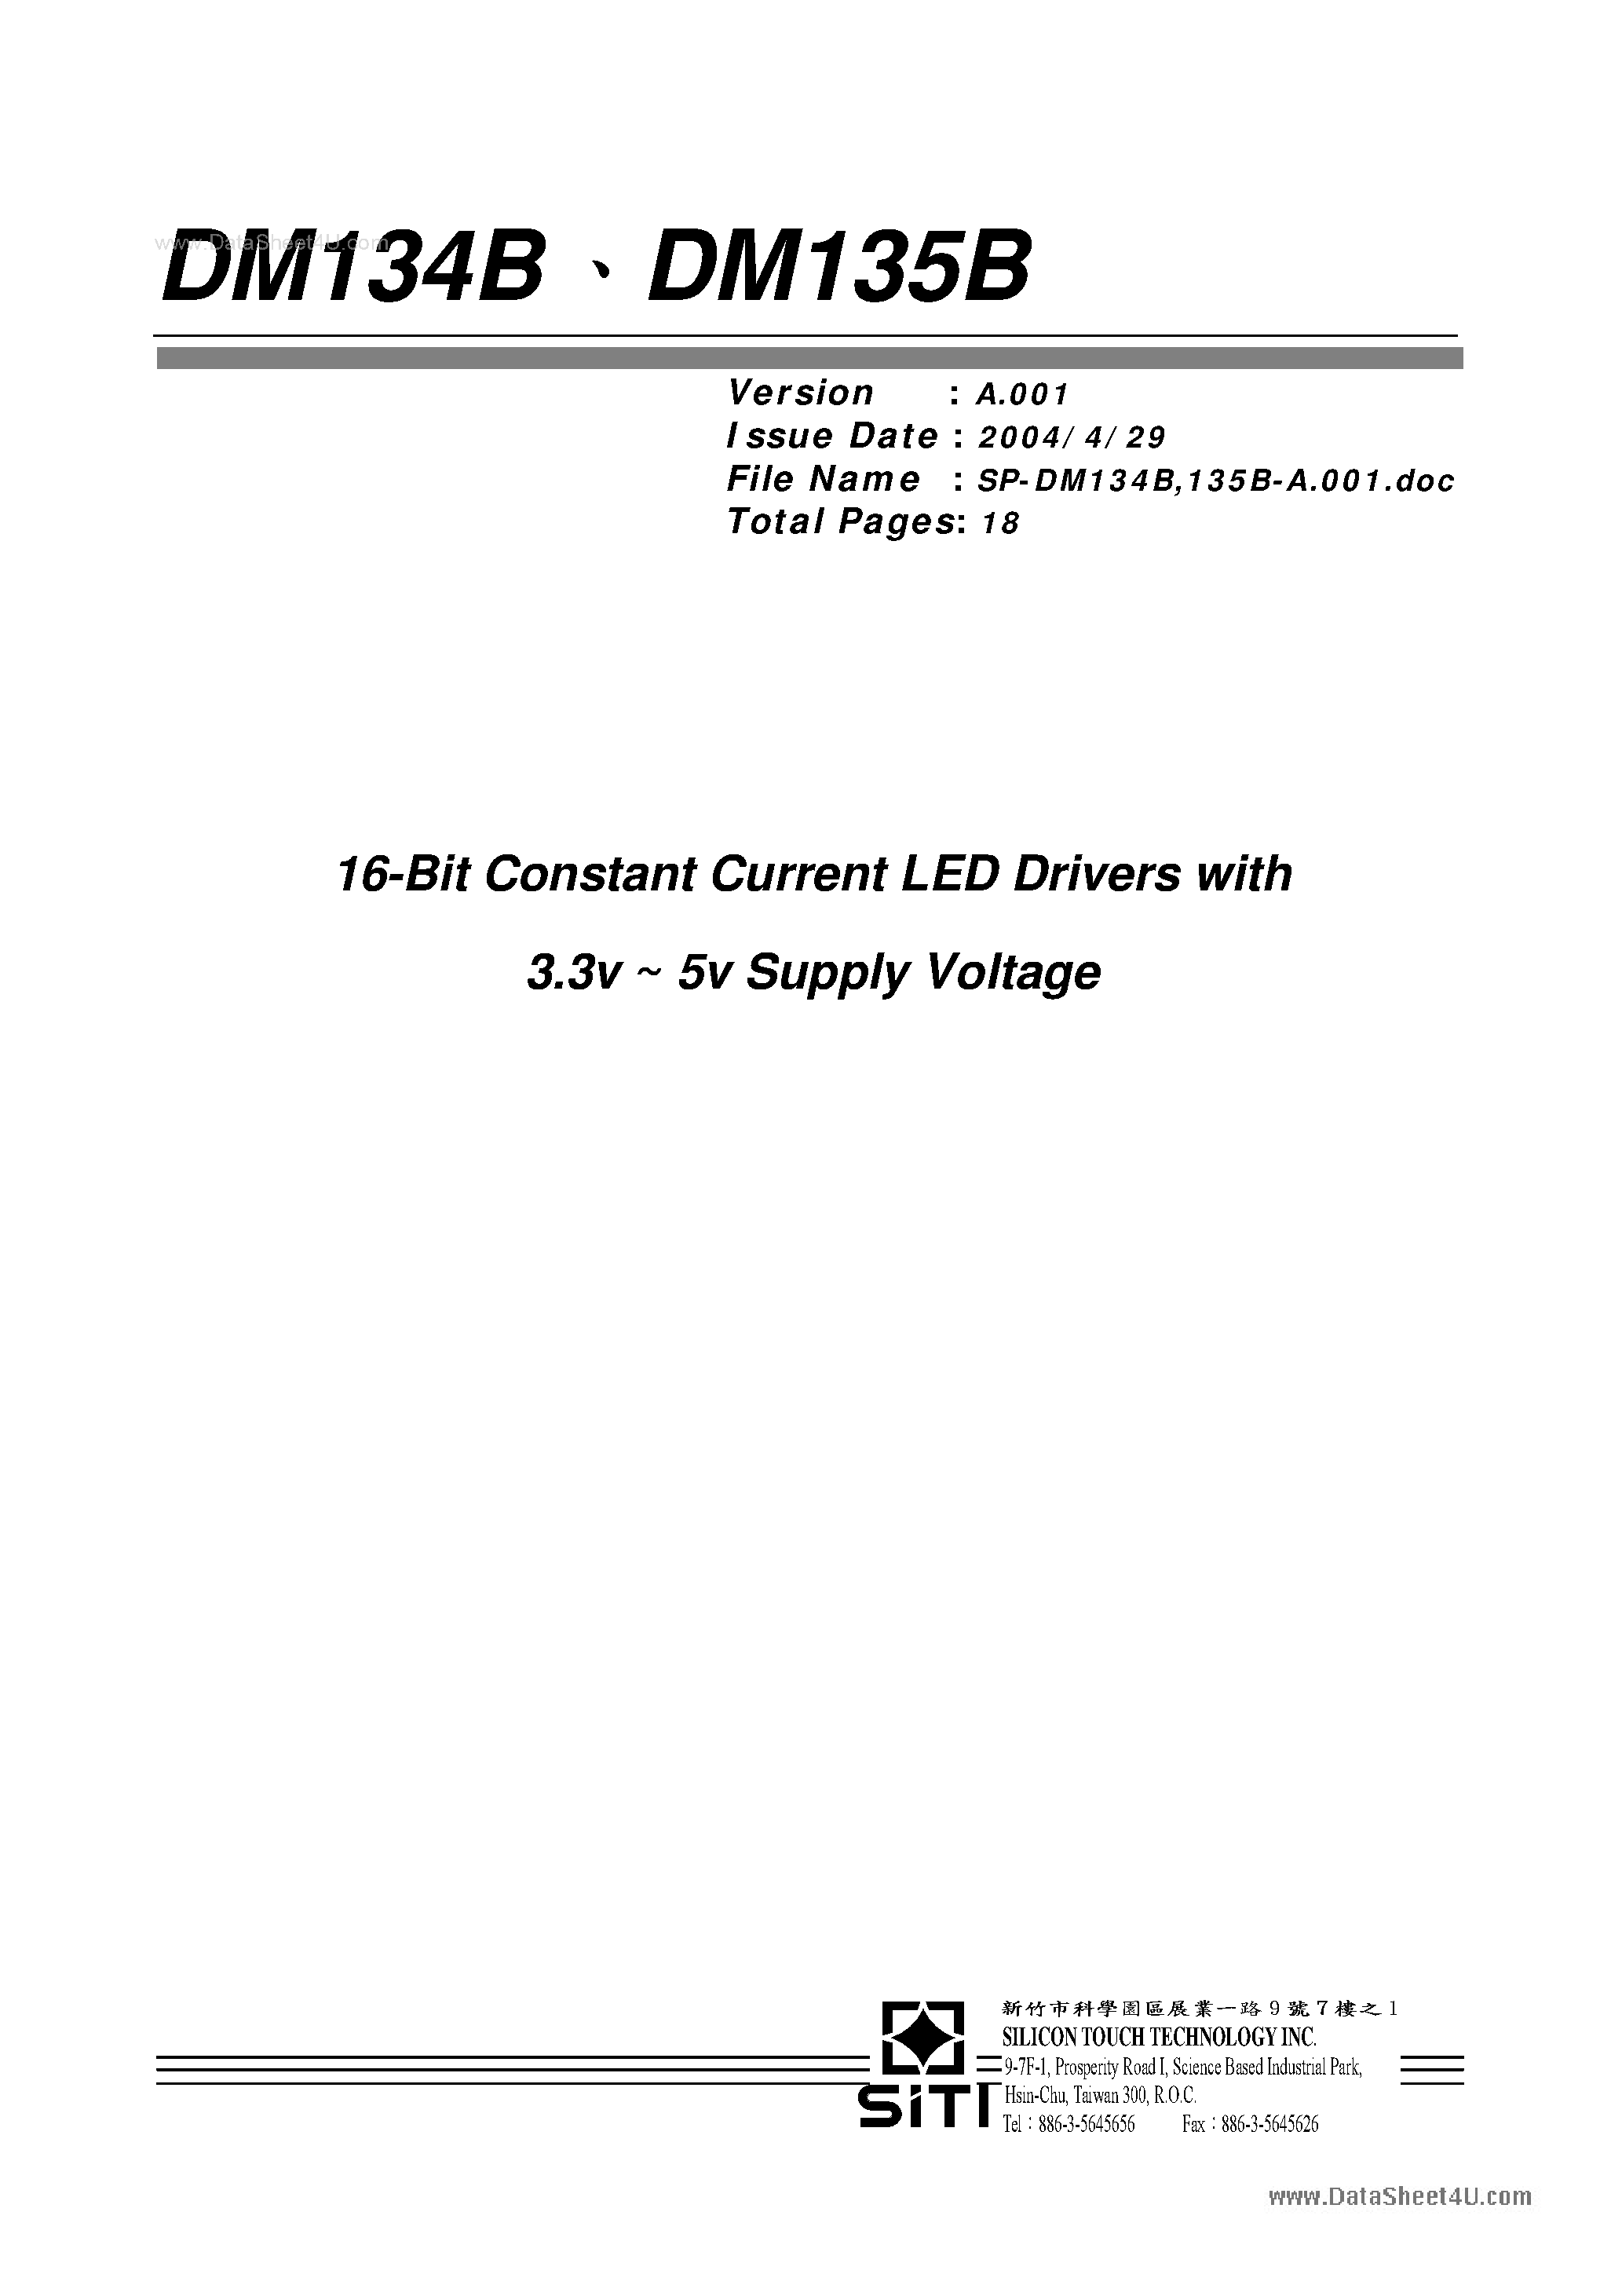 Datasheet DM134B - (DM134B / DM135B) 16 BIT CONSTANT CURRENT LED DRIVERS page 1